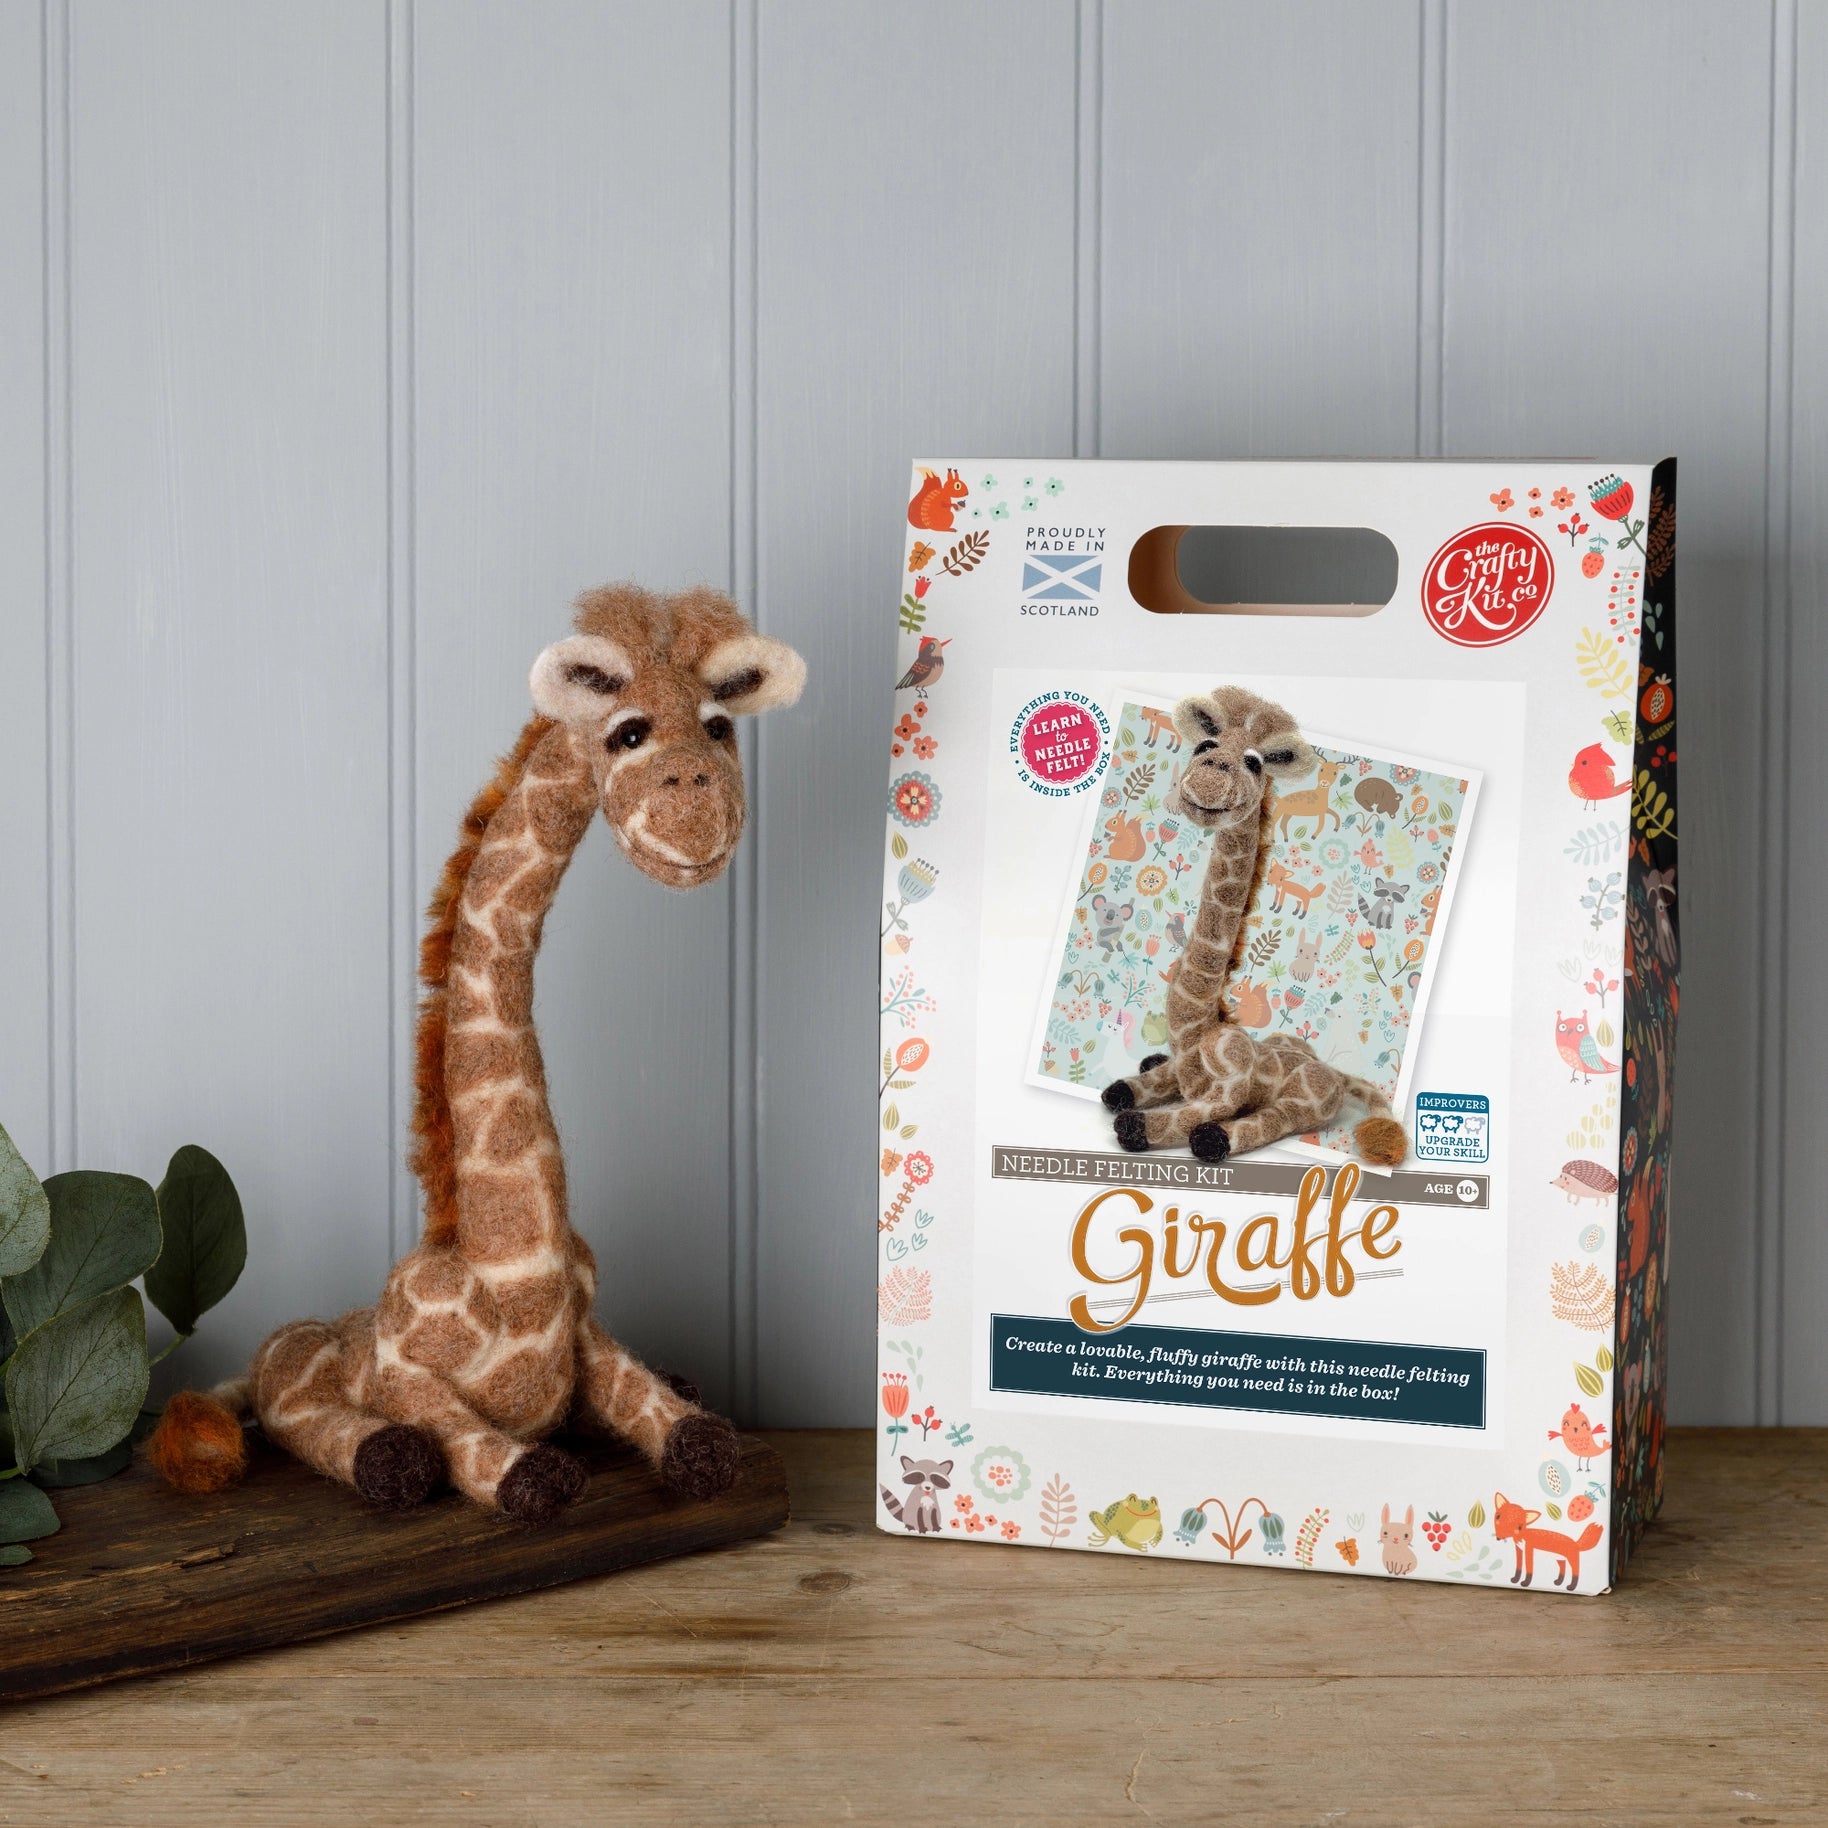 The Crafty Kit Company Giraffe Needle Felting Craft Kit